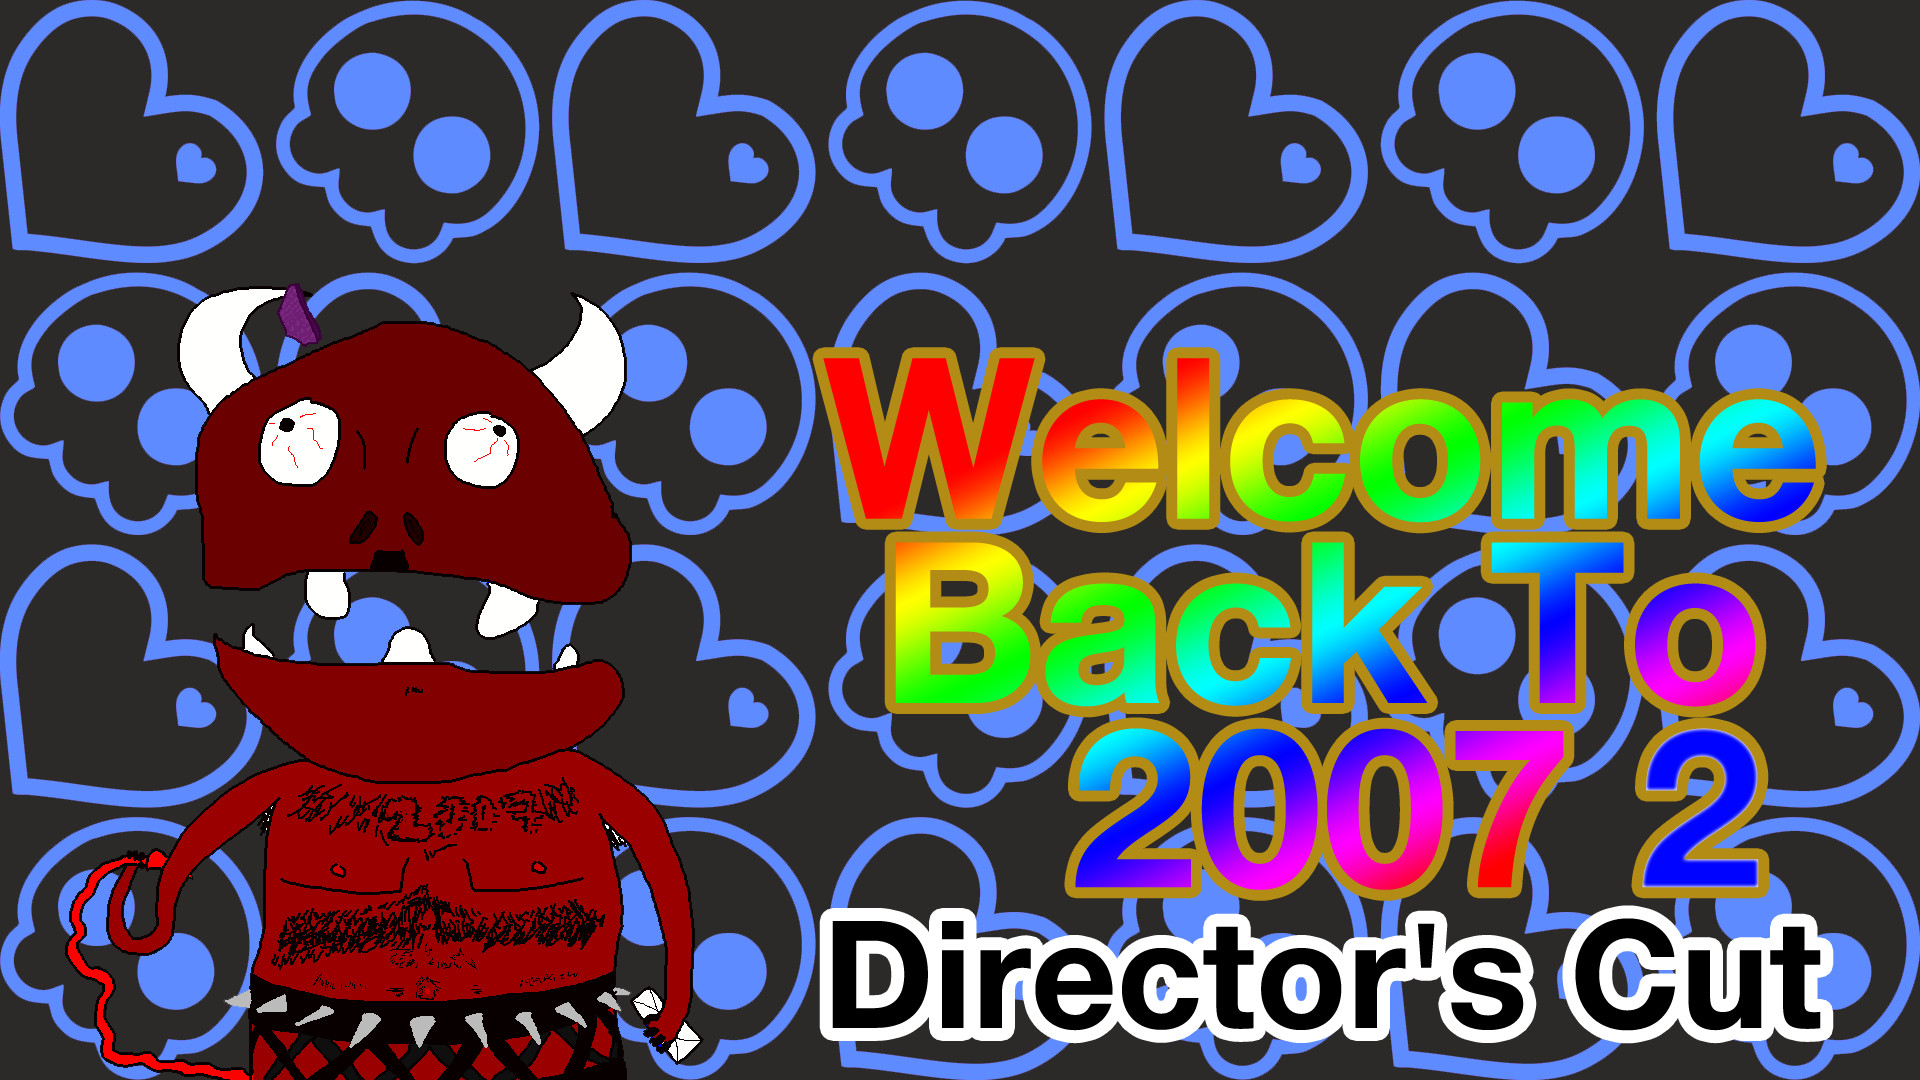 Welcome Back To 2007 2 Director's Cut screenshot